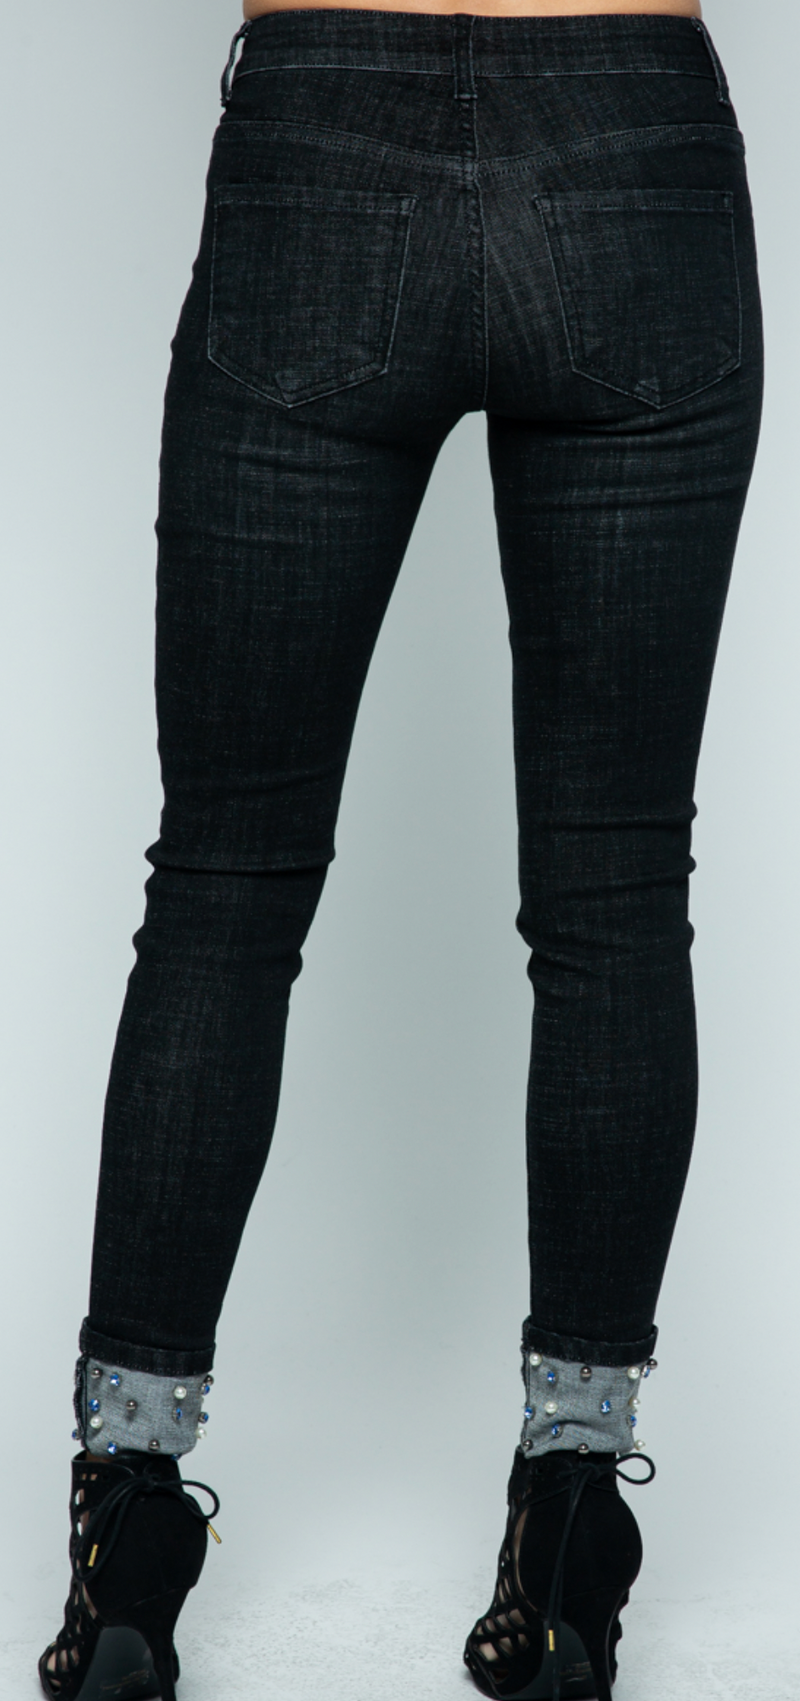 black beaded jeans